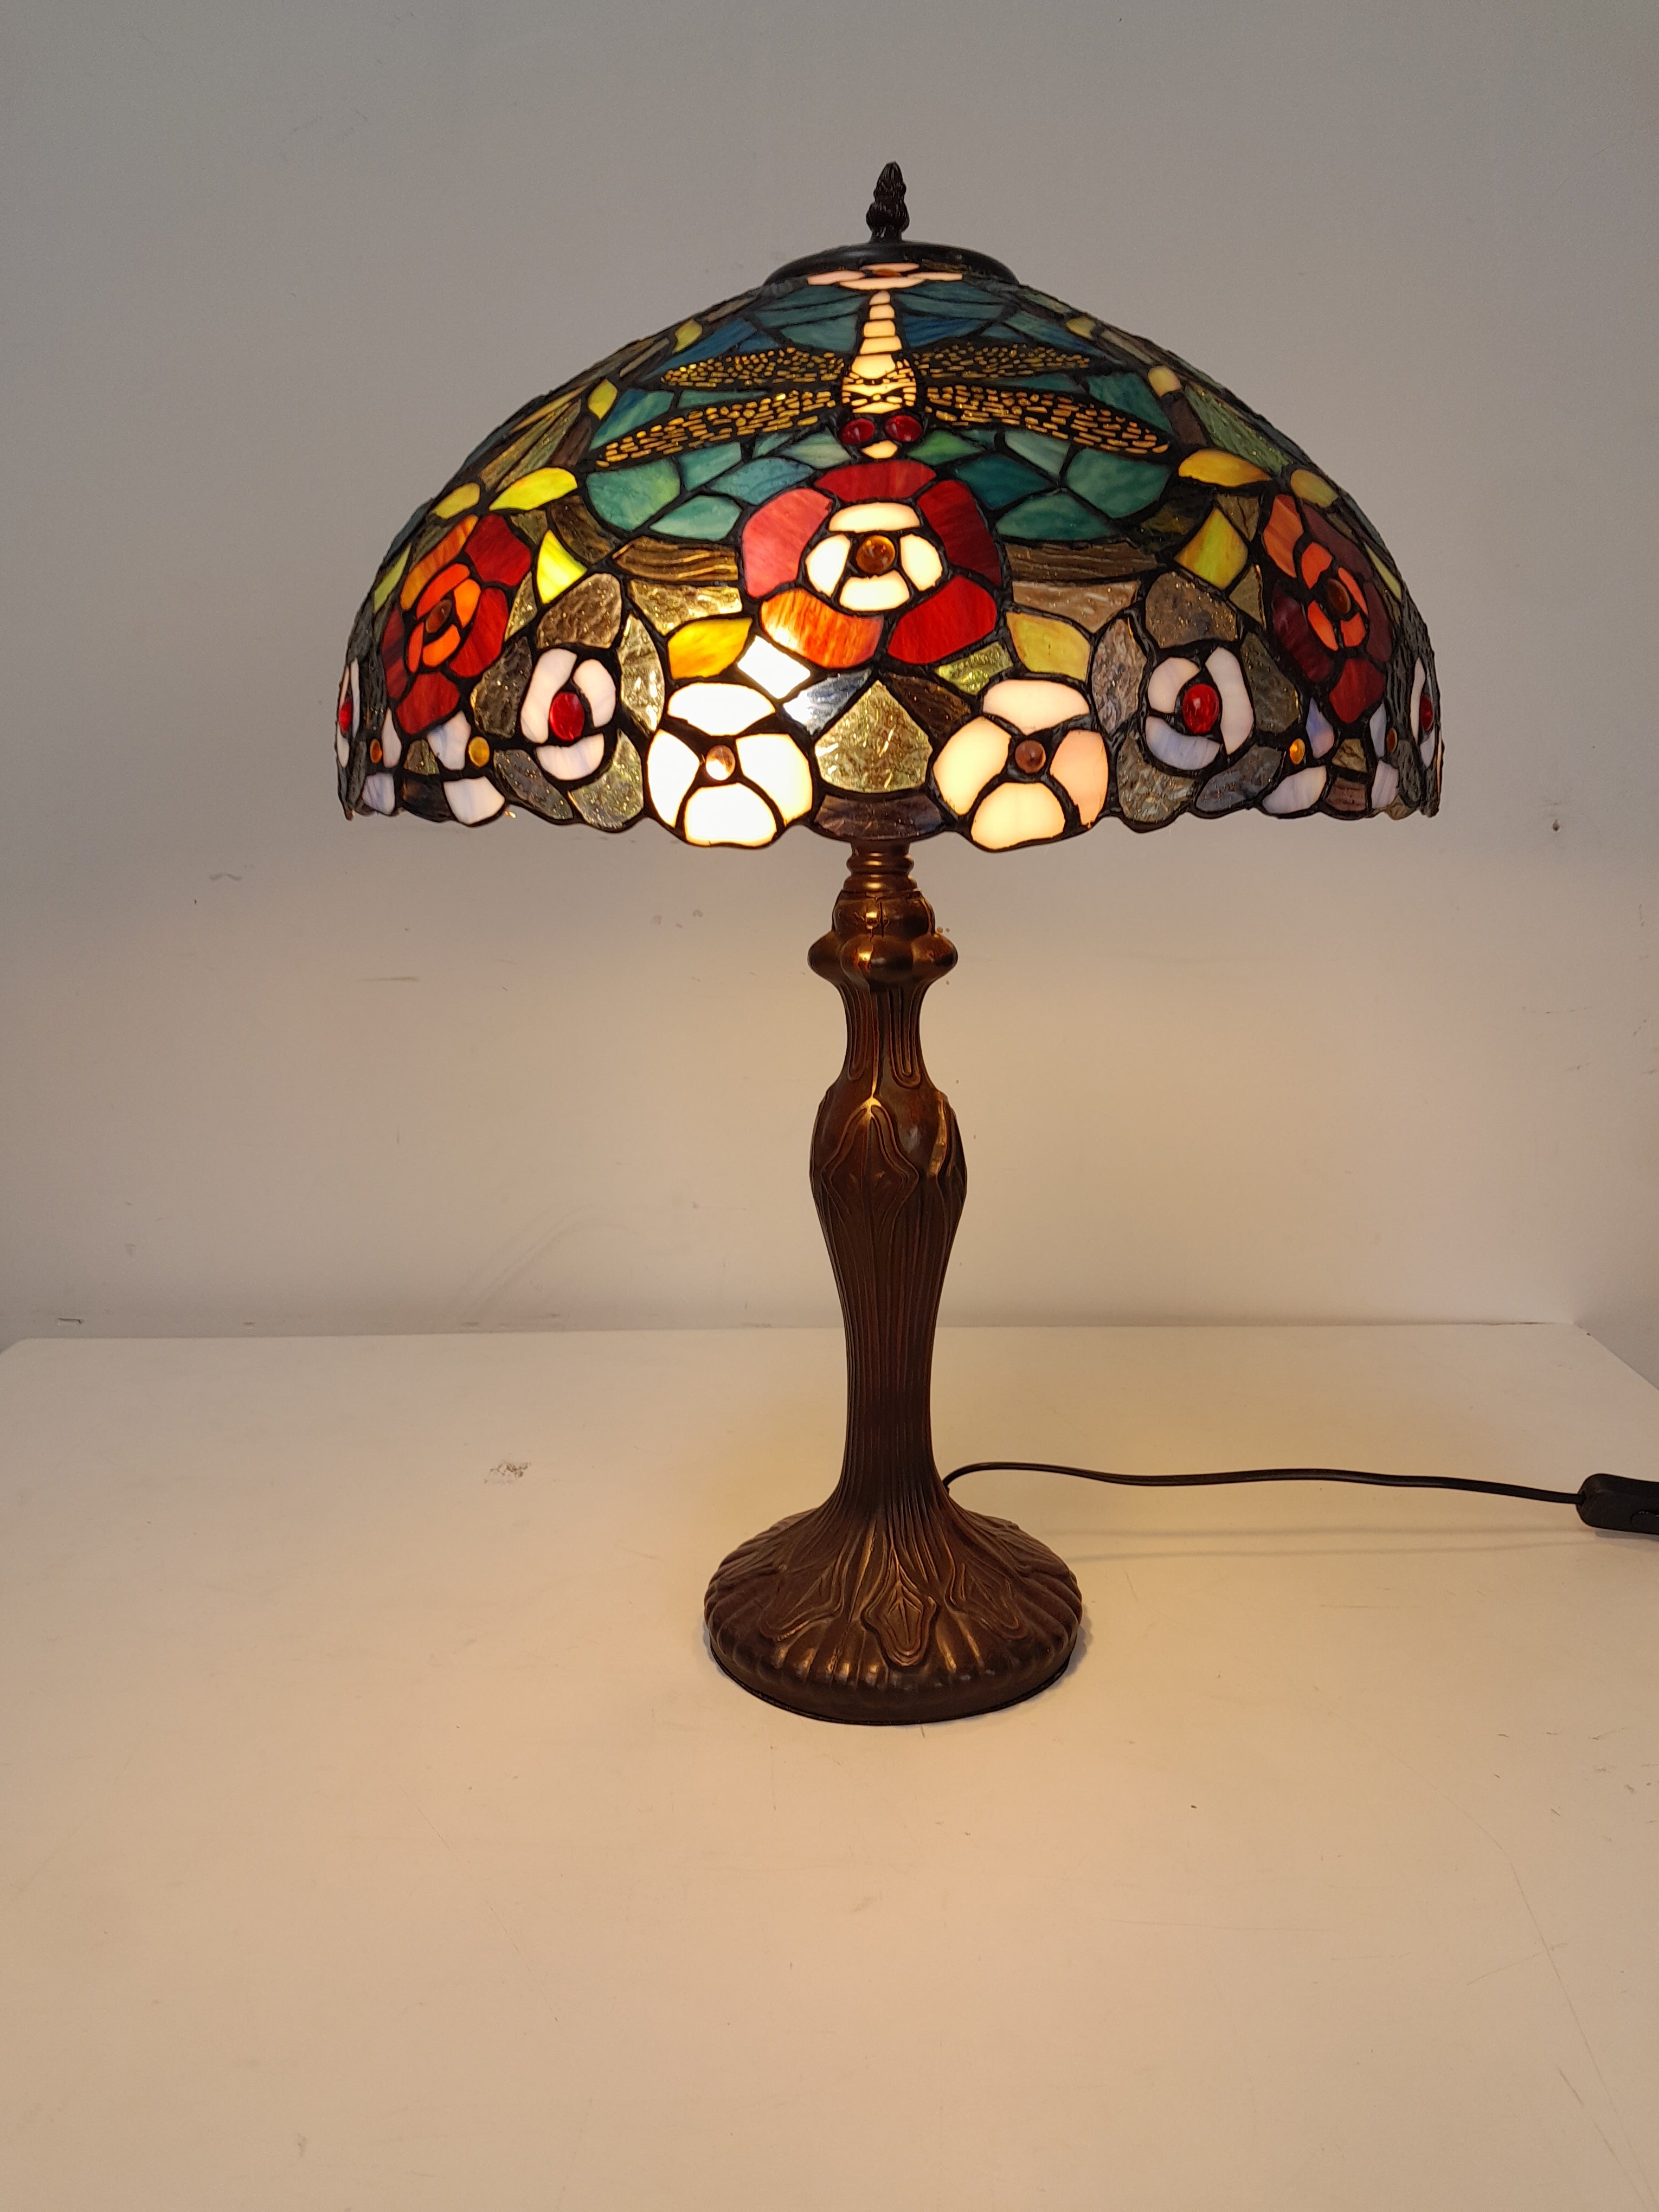 Tiffany style lamp - Dragonfly